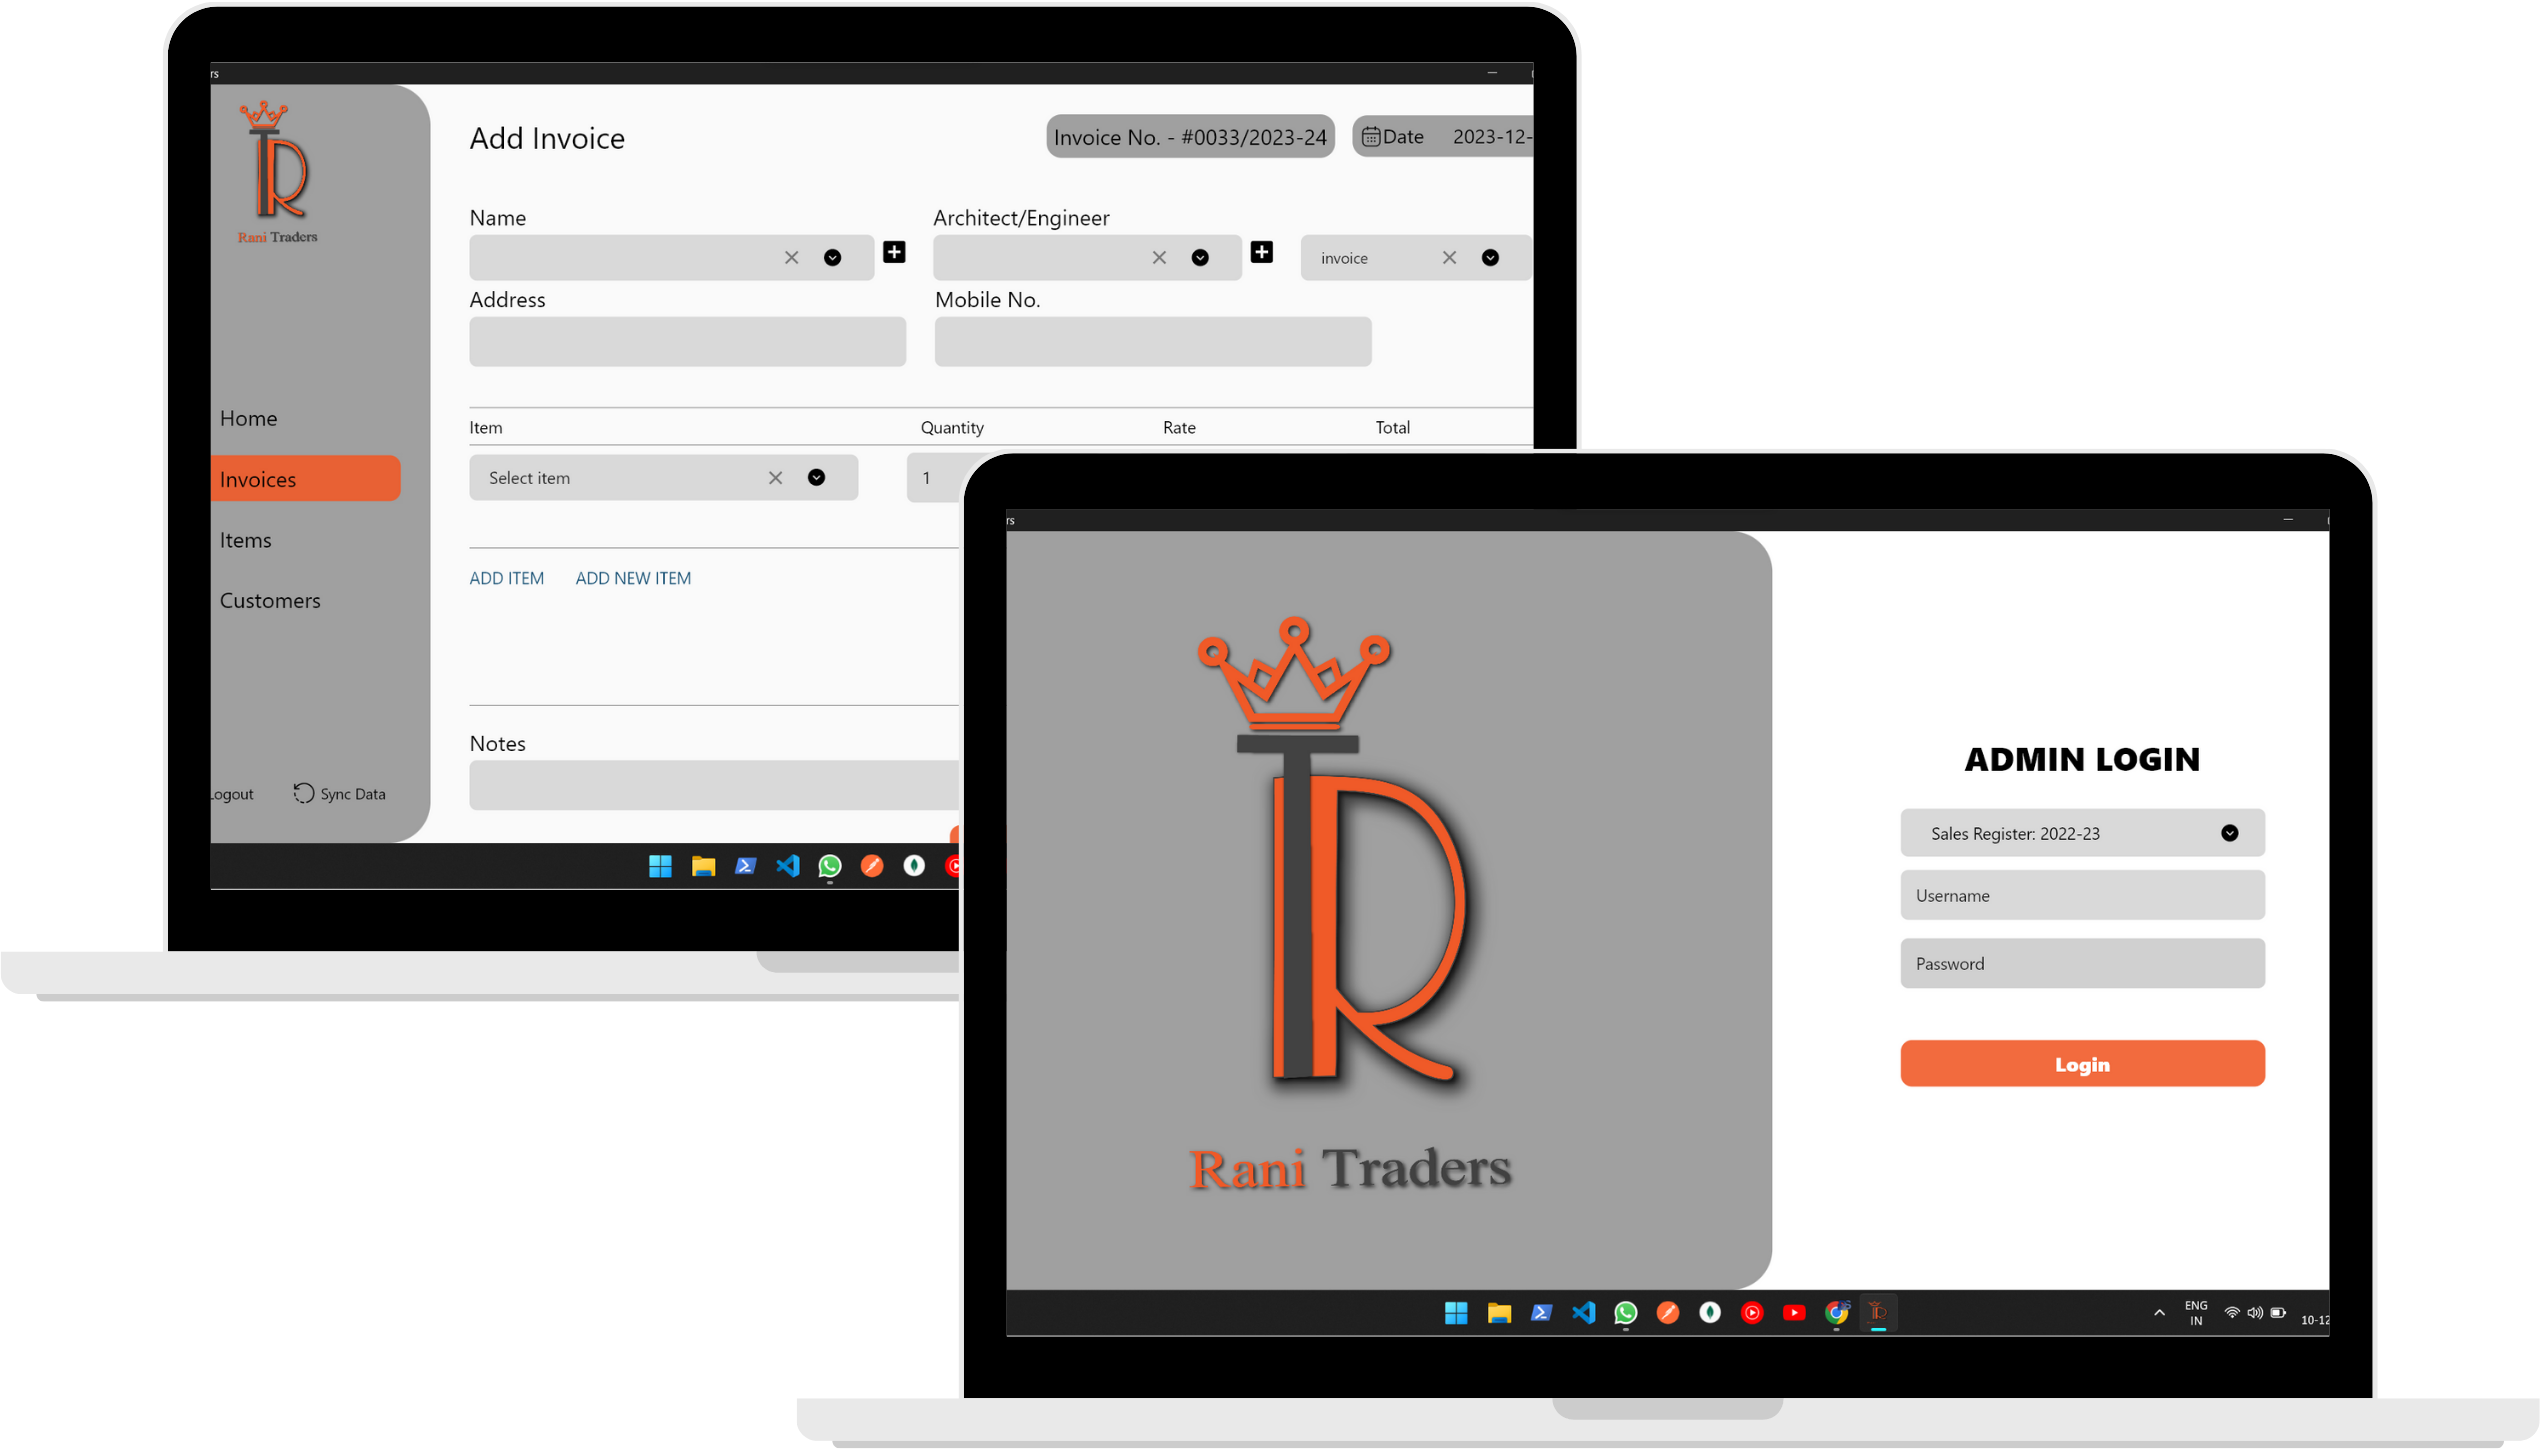 Rani Traders